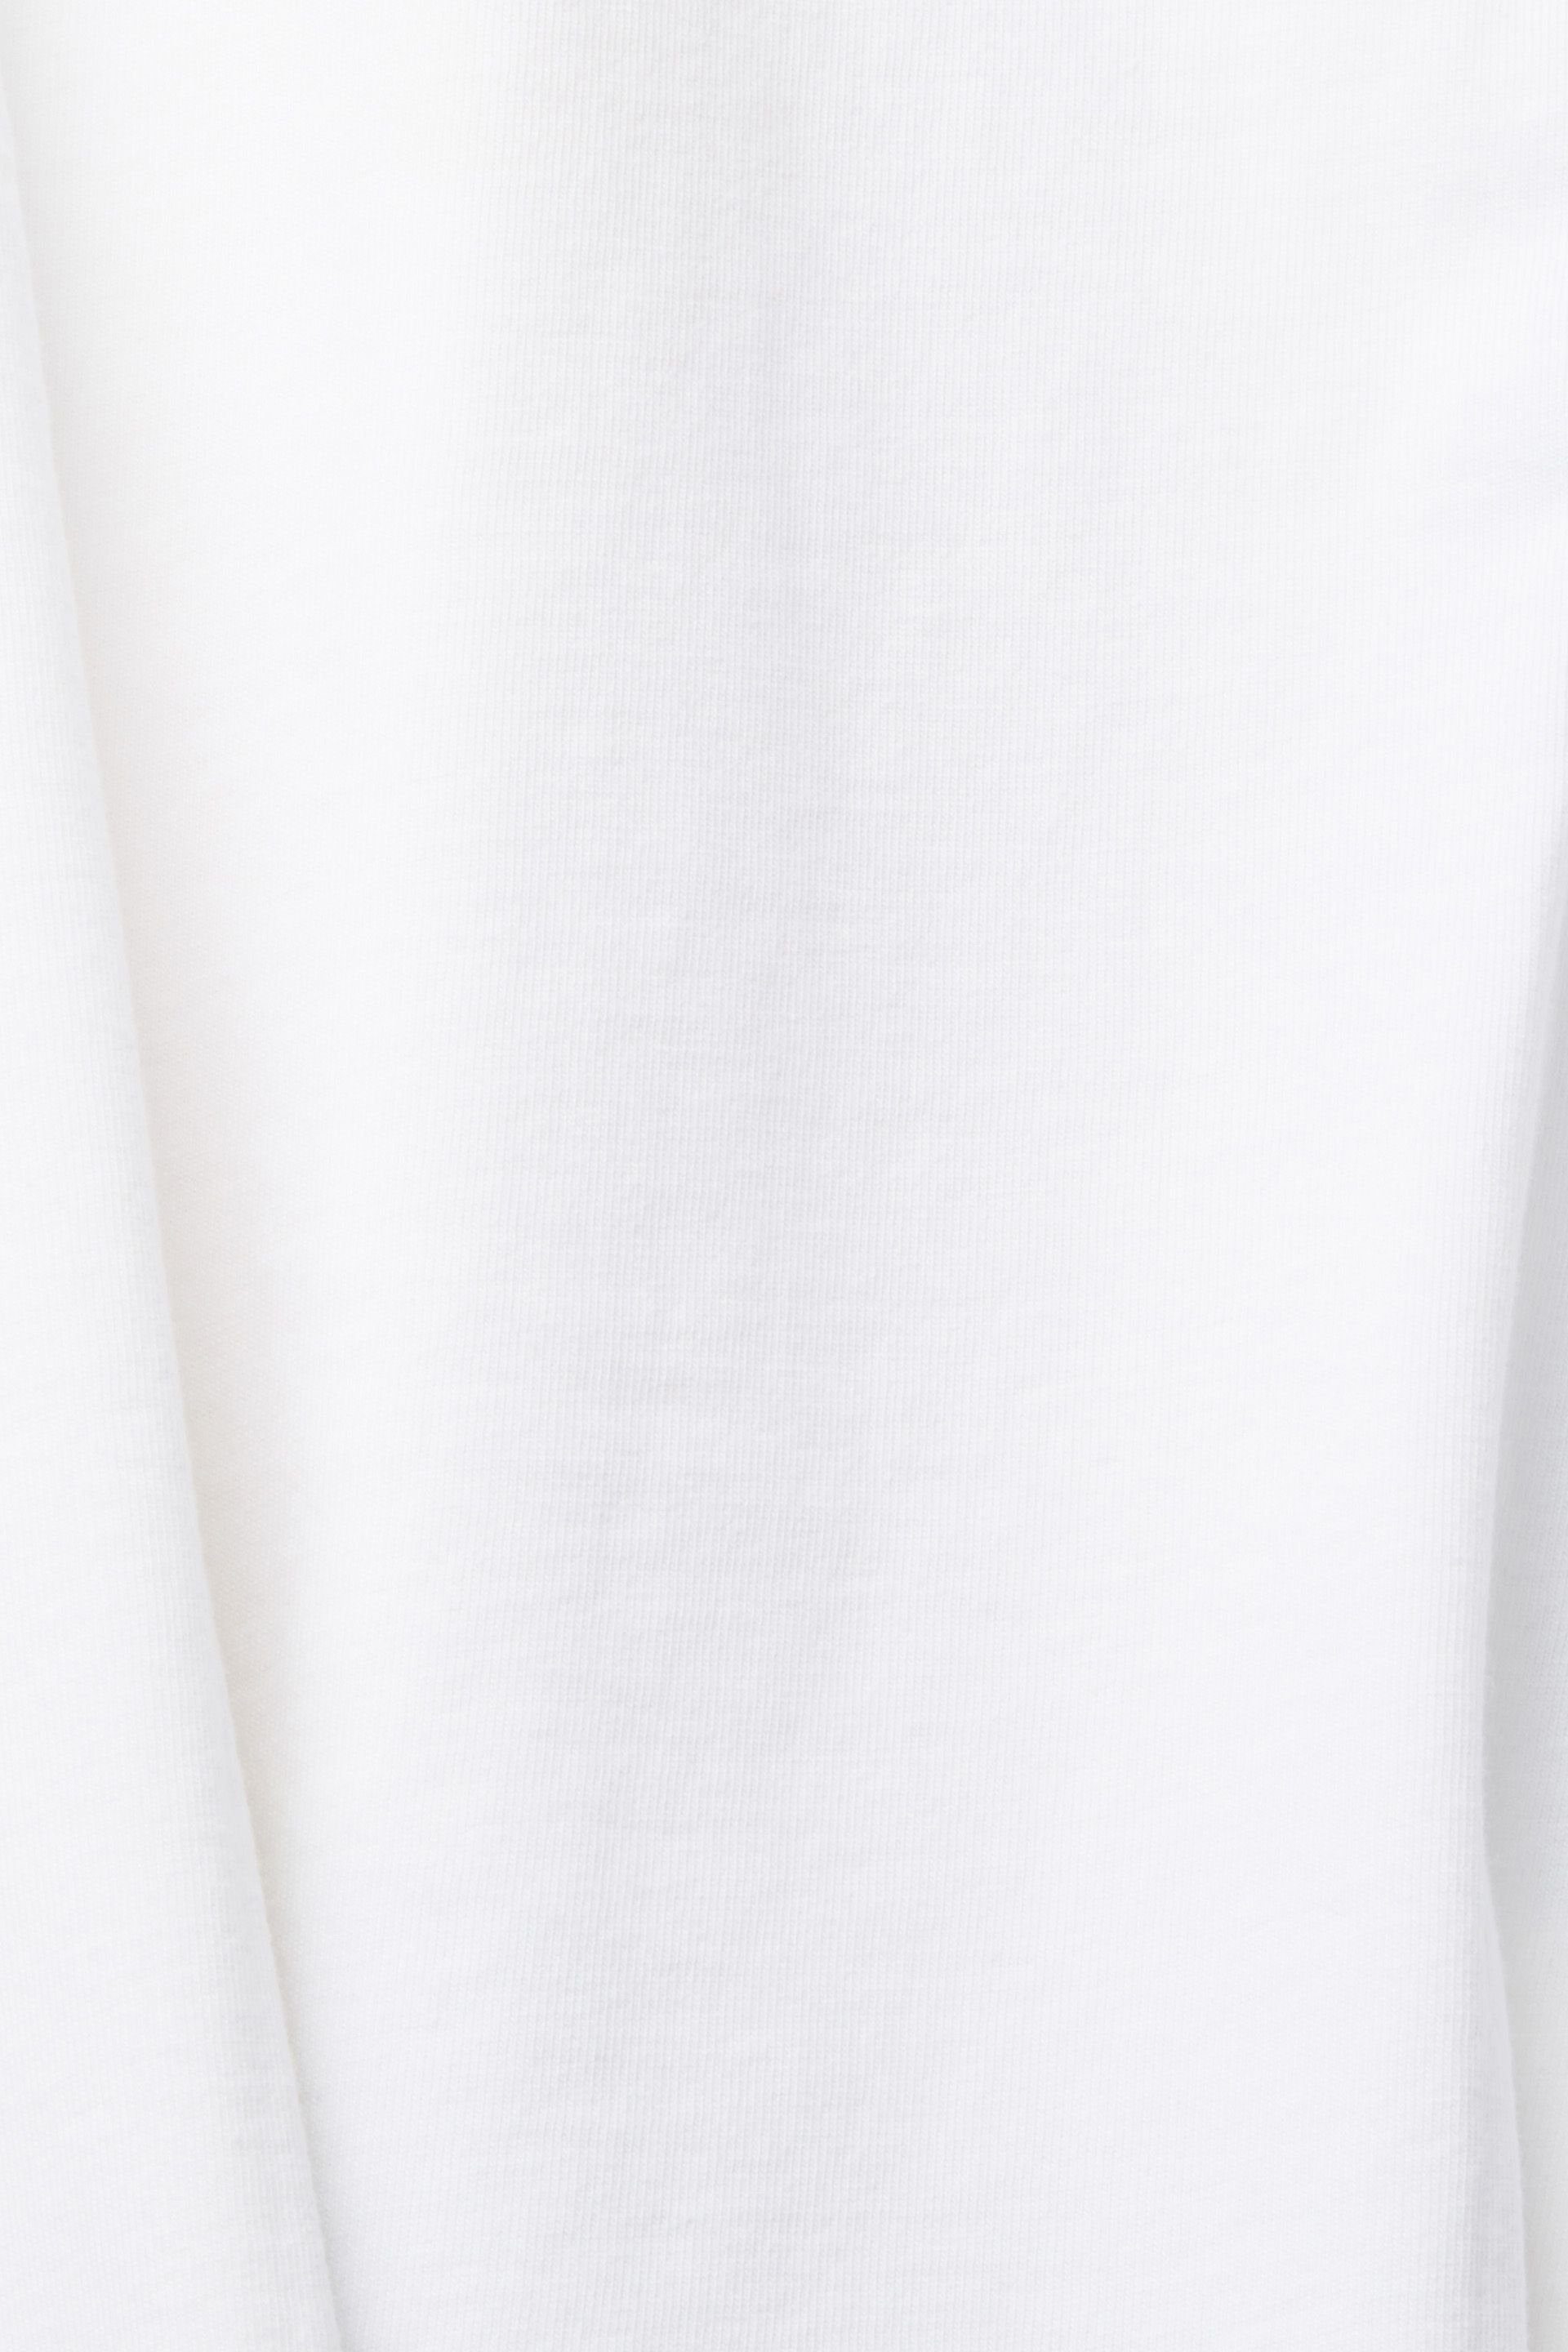 T-Shirt white Esprit